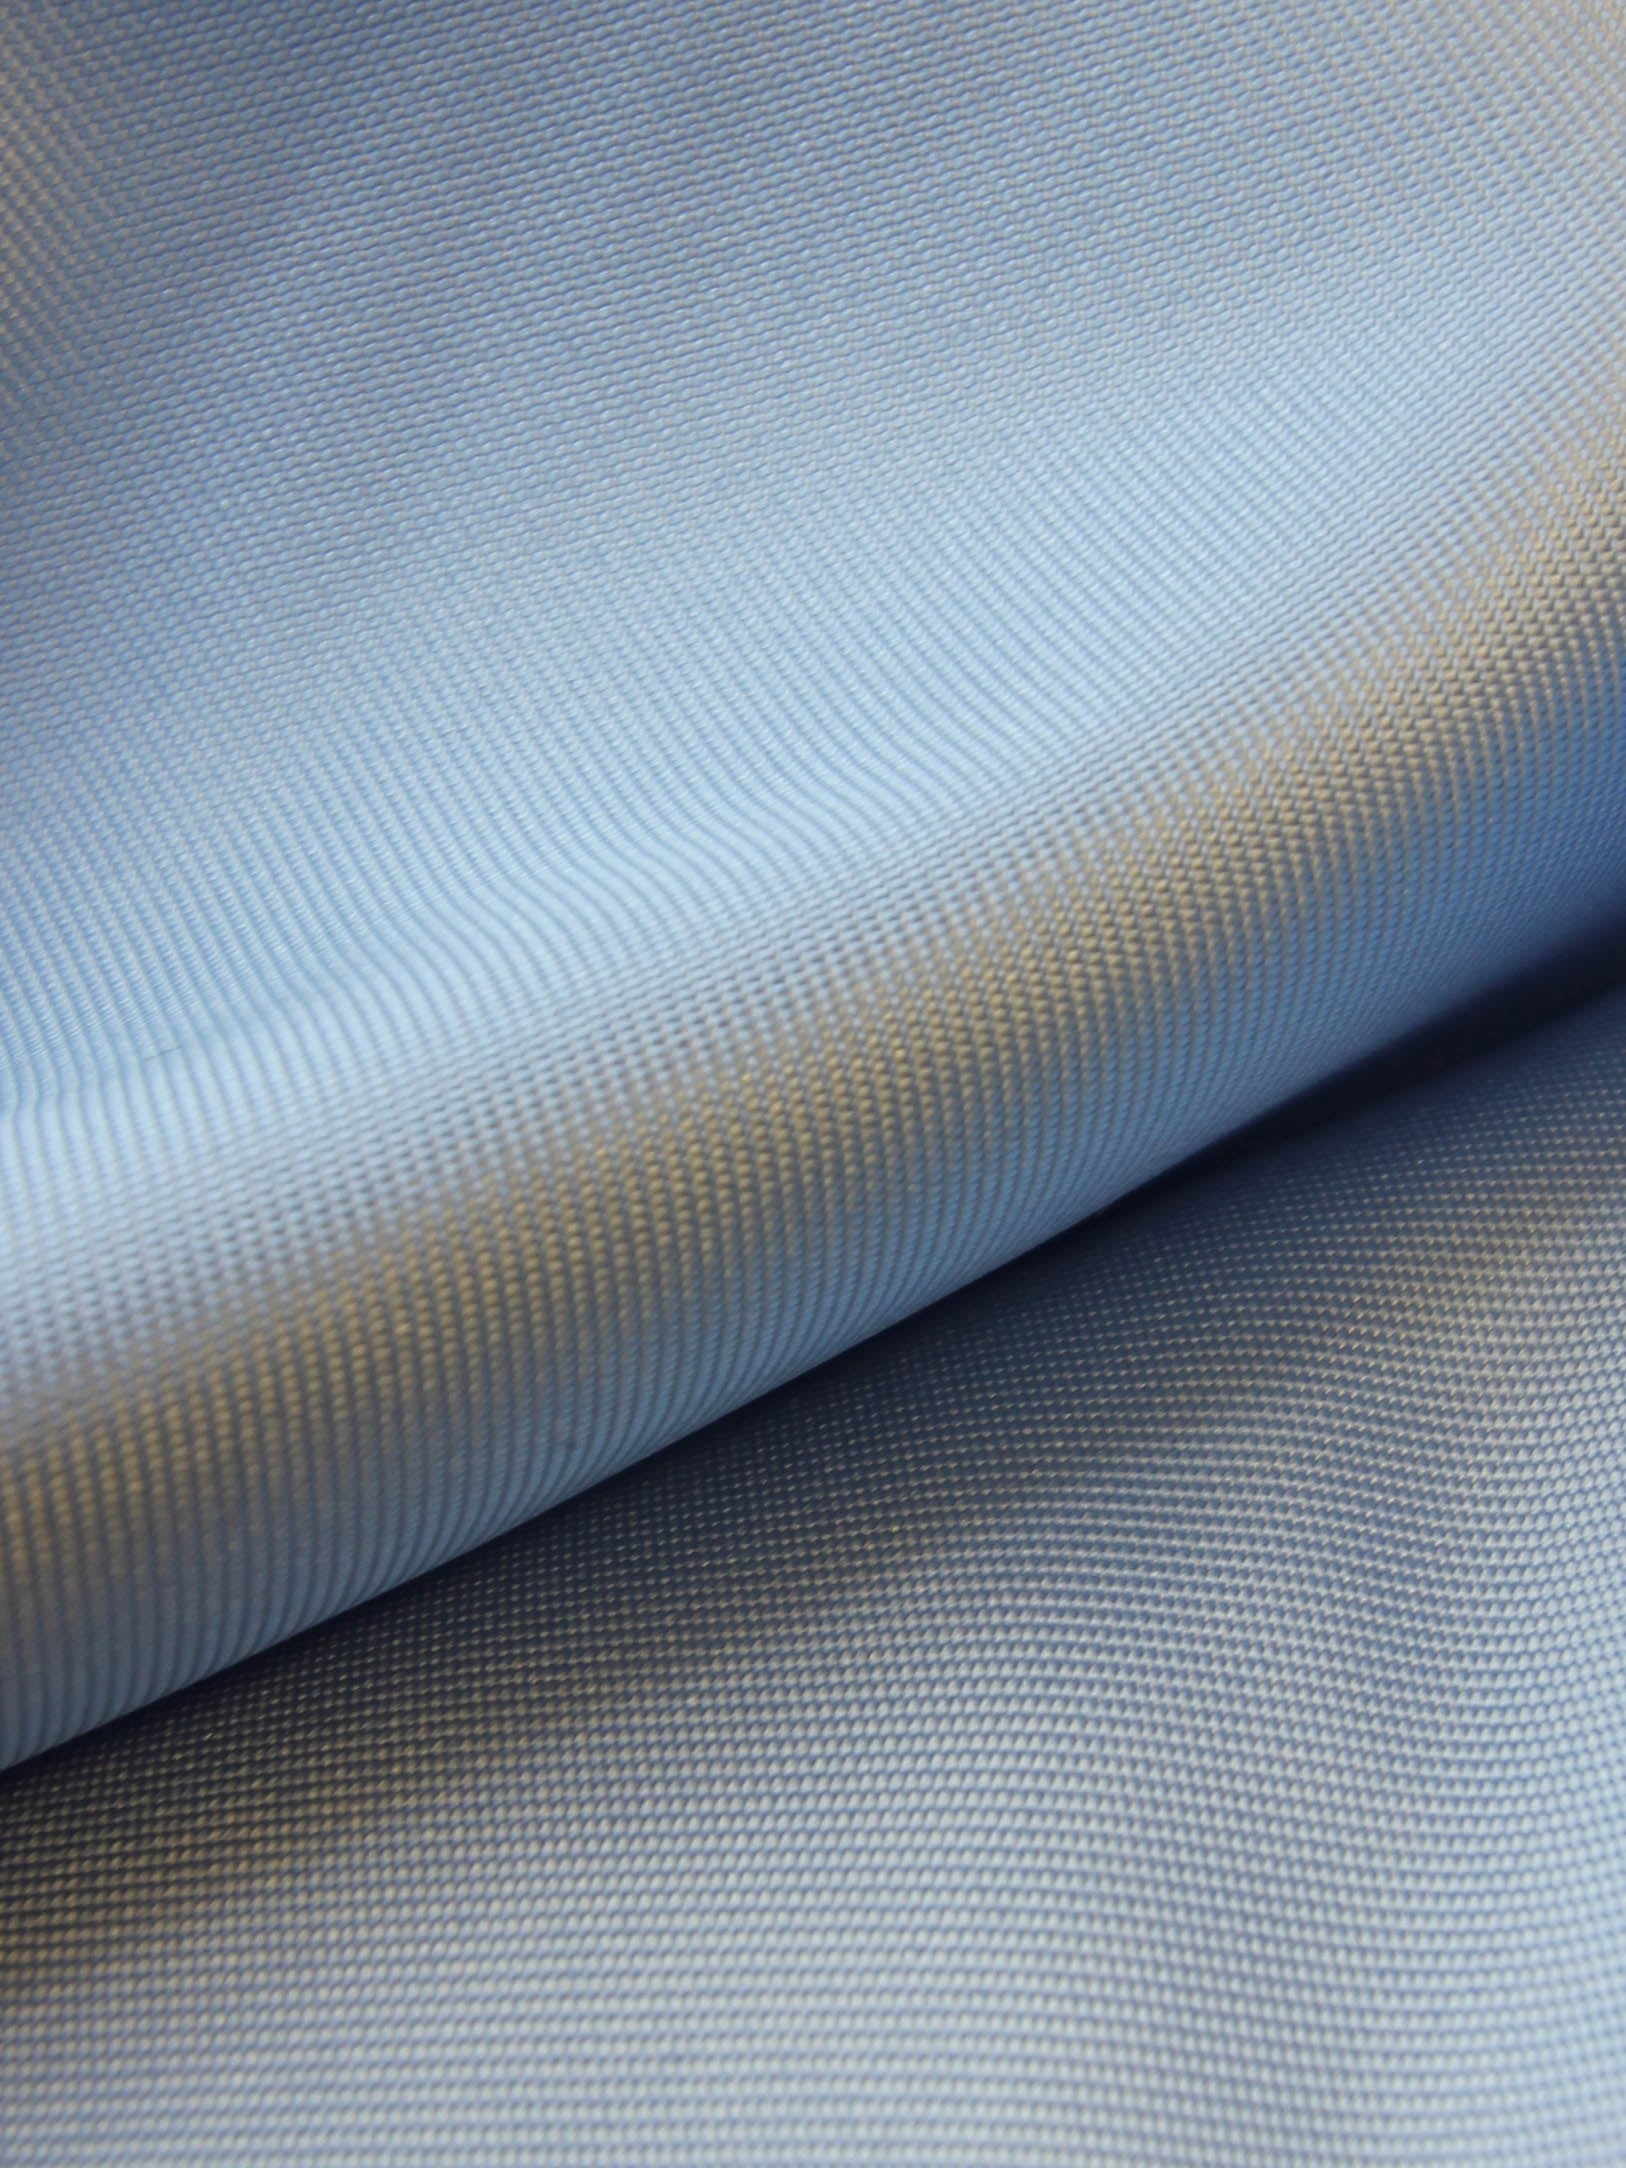 Mikado en polyester (154 cm/60") - Mikado (couleurs claires)